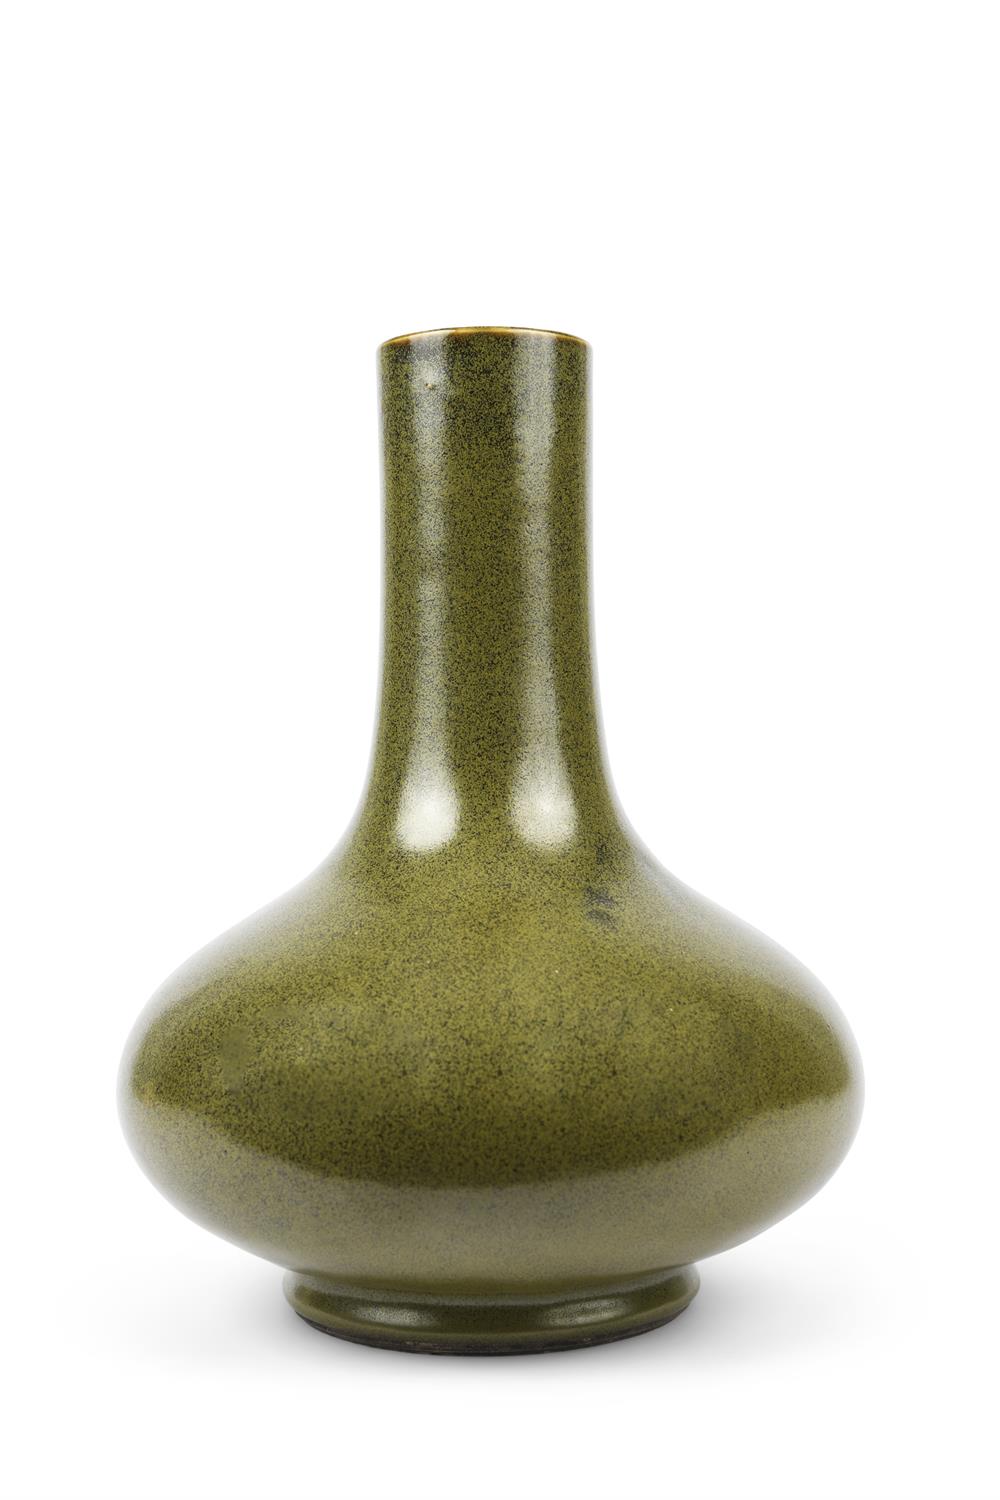 A TEADUST-GLAZED BOTTLE VASE 清代 茶葉末釉荸薺瓶 China, 19th century. H: 29.3cm - Image 3 of 4